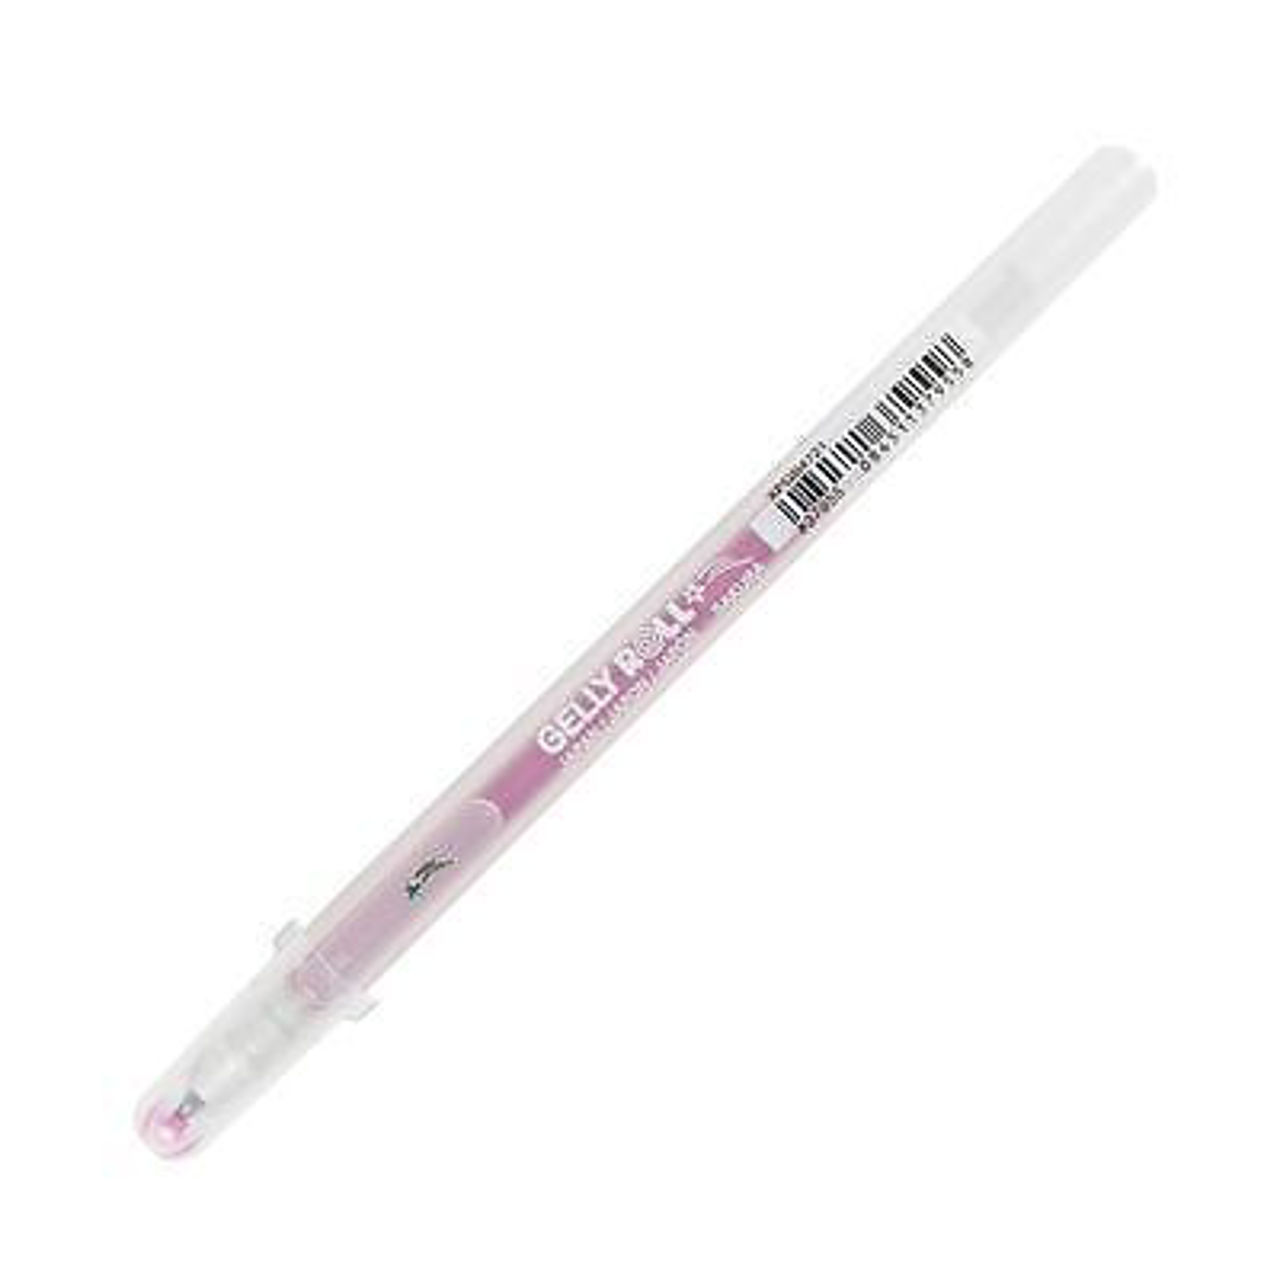 6 Sakura Pens, Sakura Gelly Roll Stardust Meteor Coloring Pens 1mm